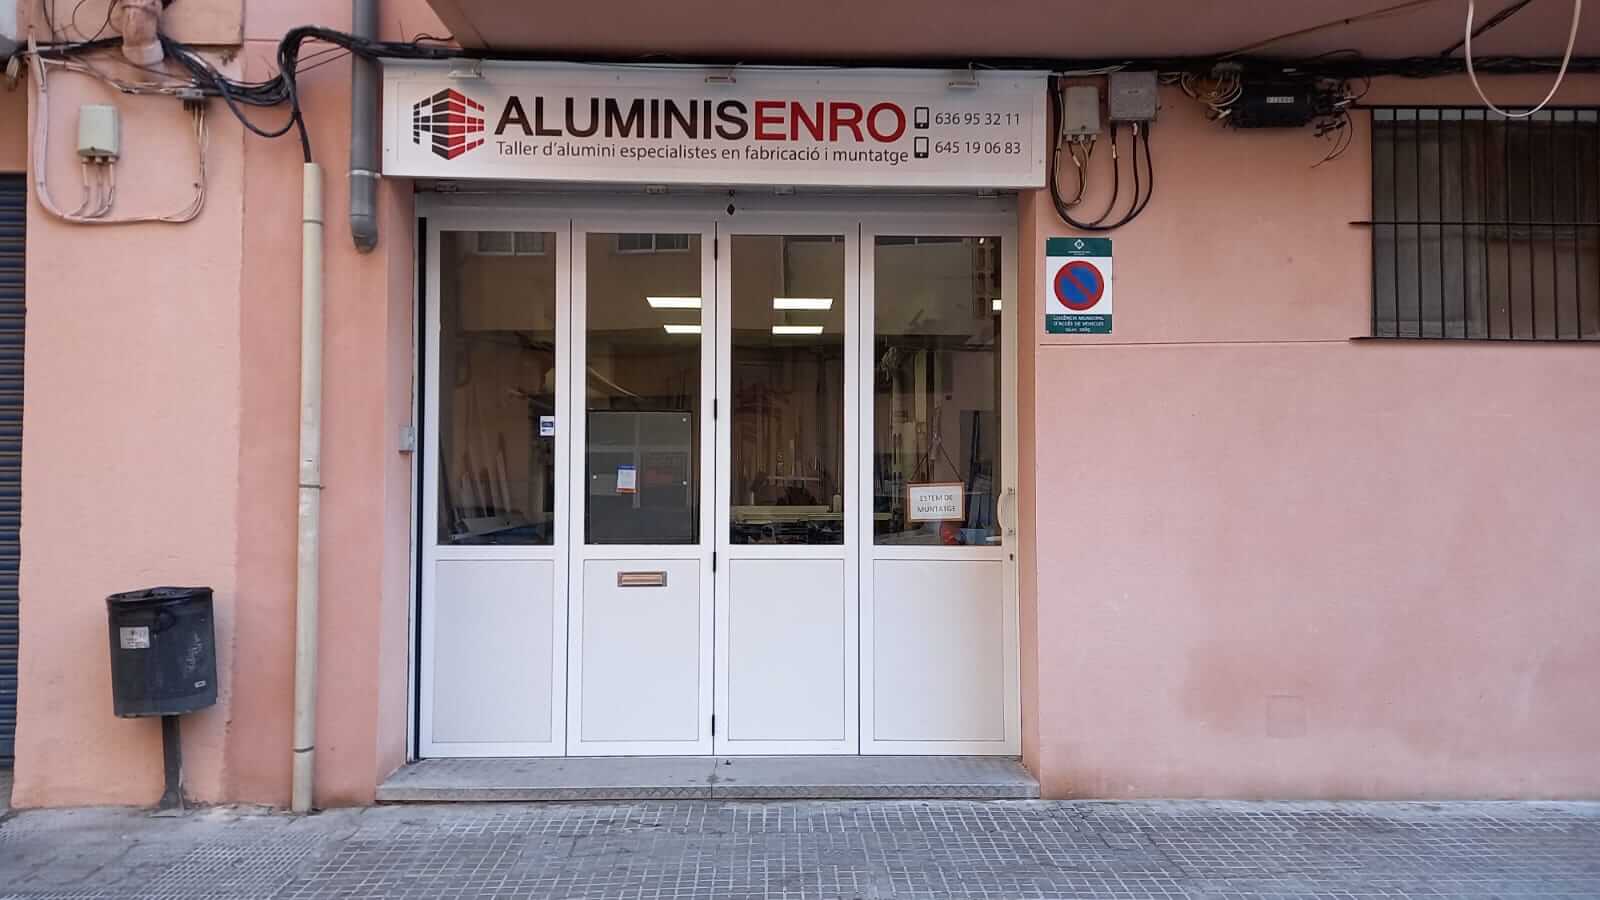 Aluminis Enro